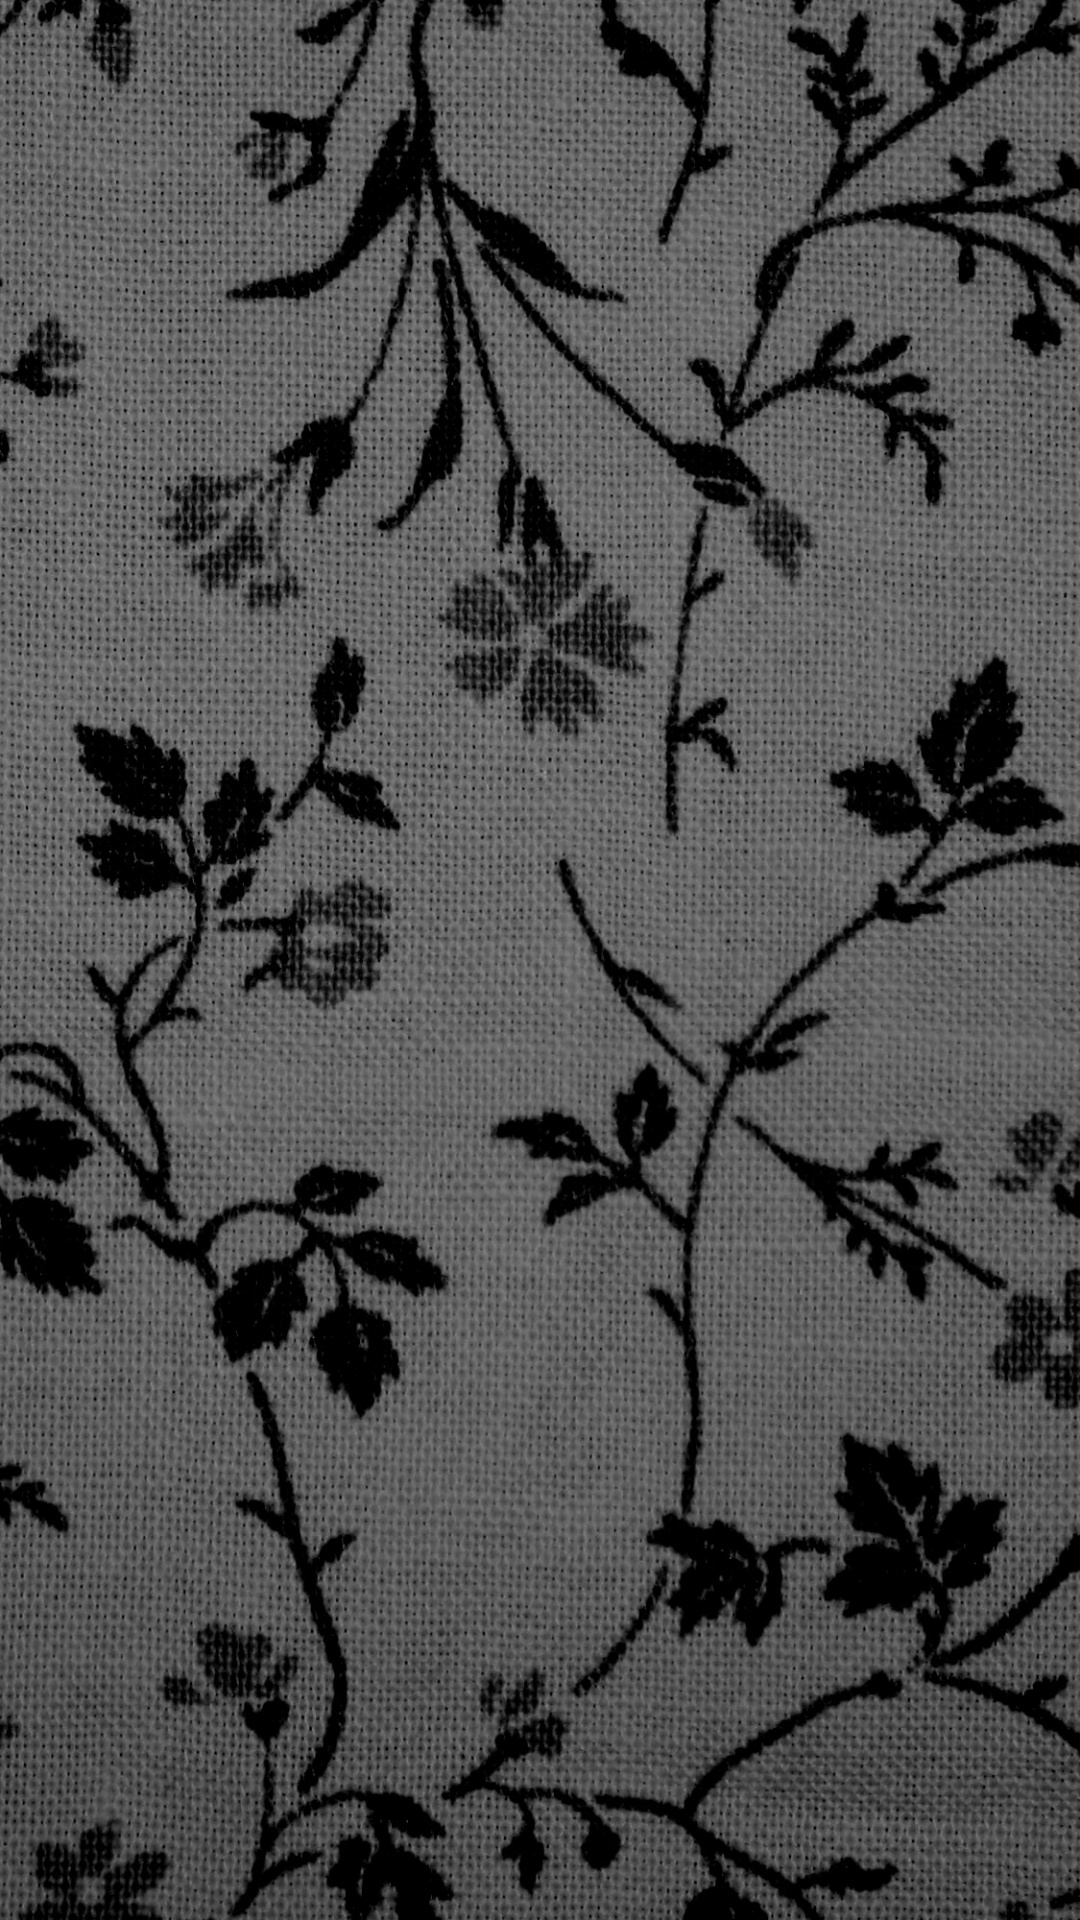 Textil Floral Blanco y Negro. Wallpaper in 1080x1920 Resolution